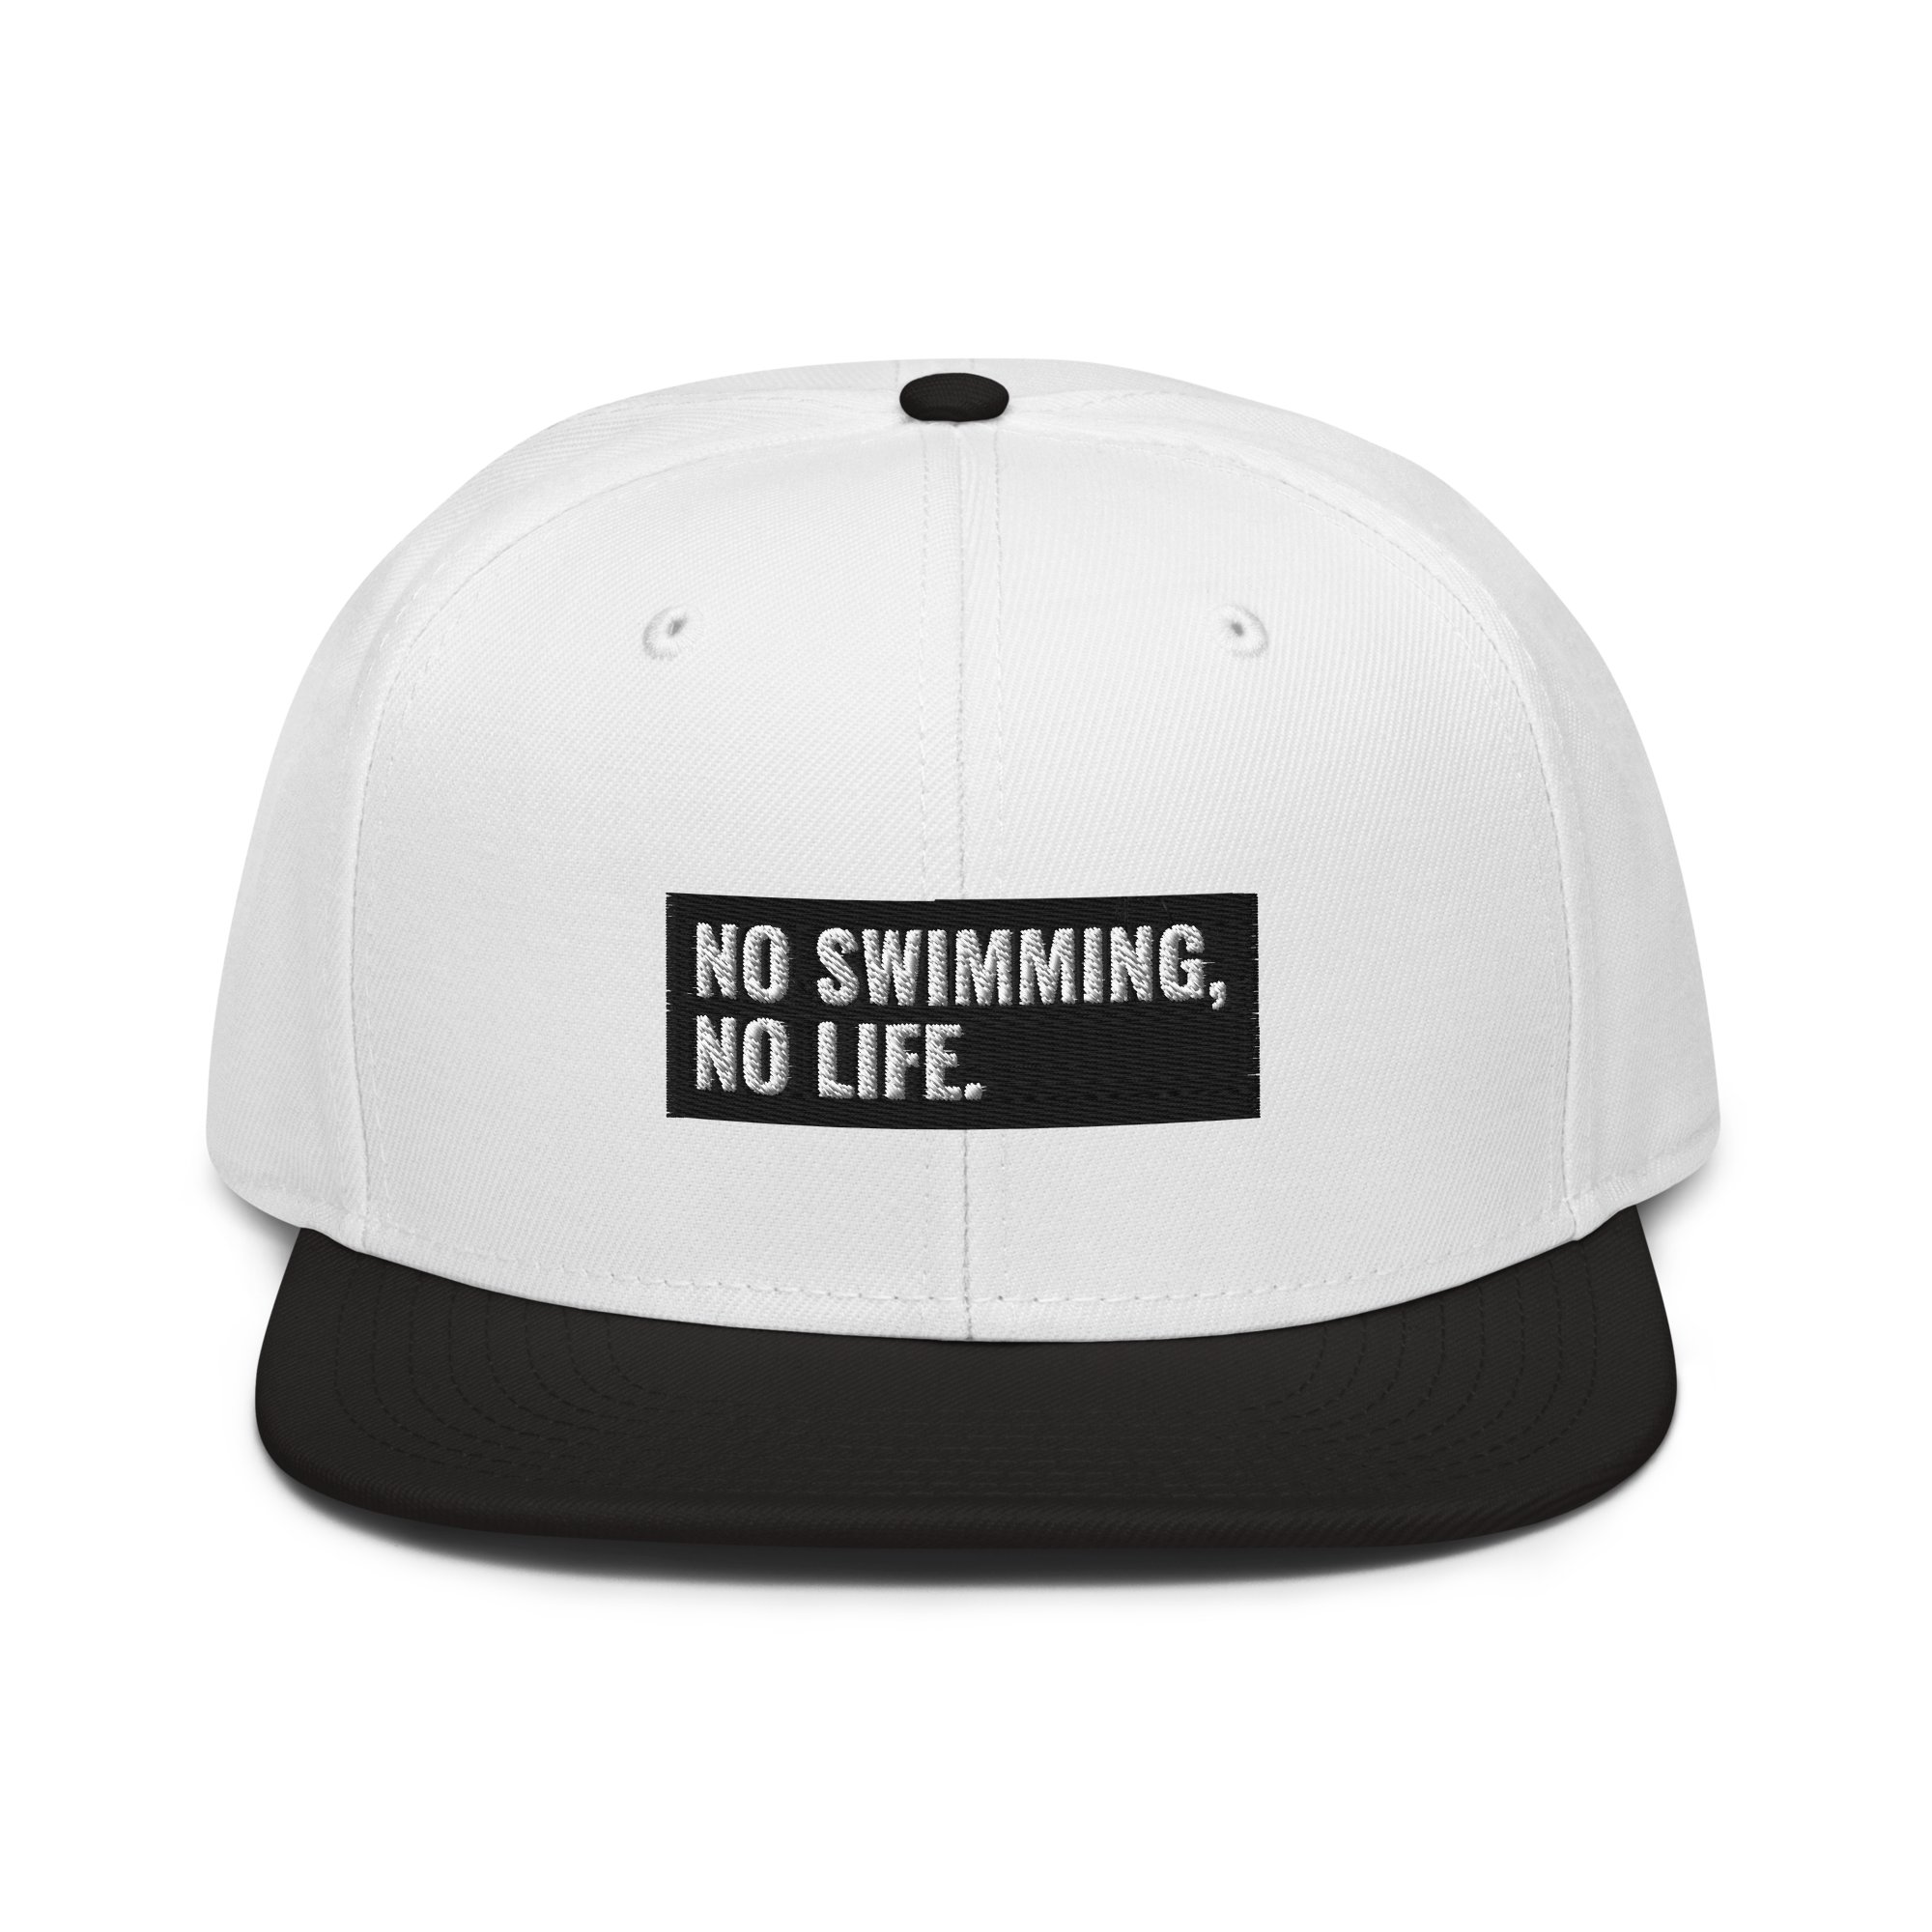 Swimmer Hat